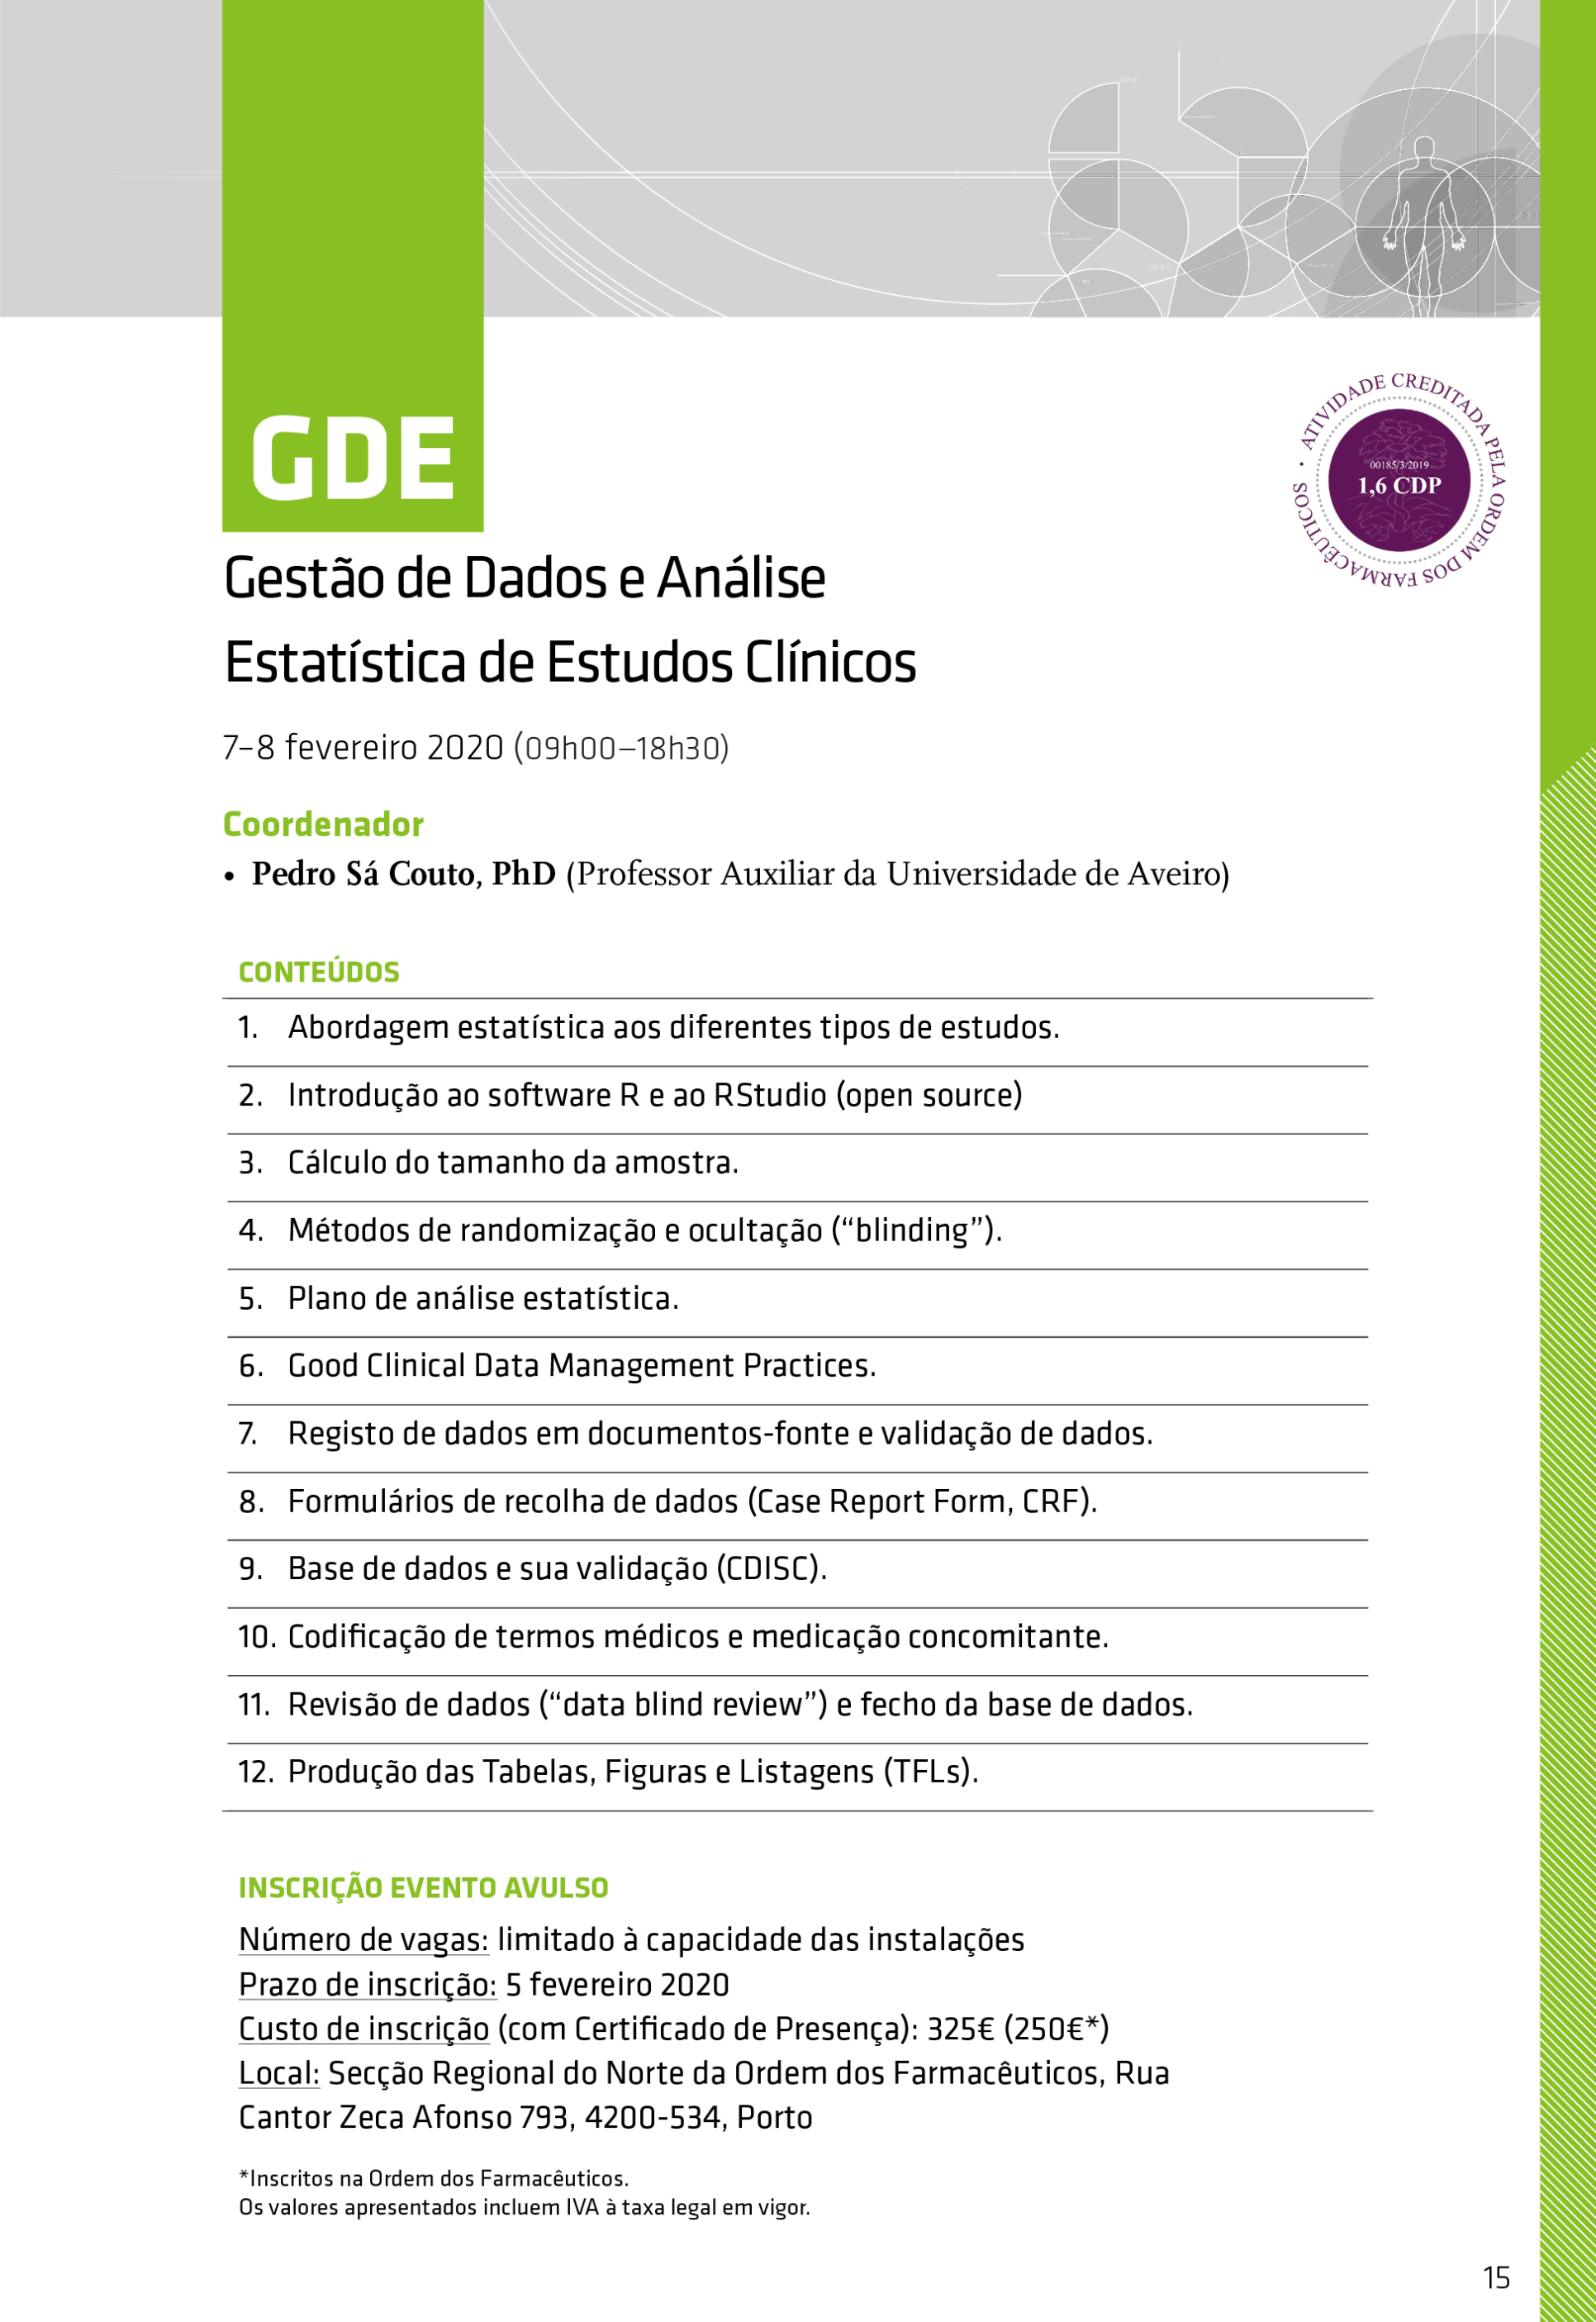 GDE - Programa